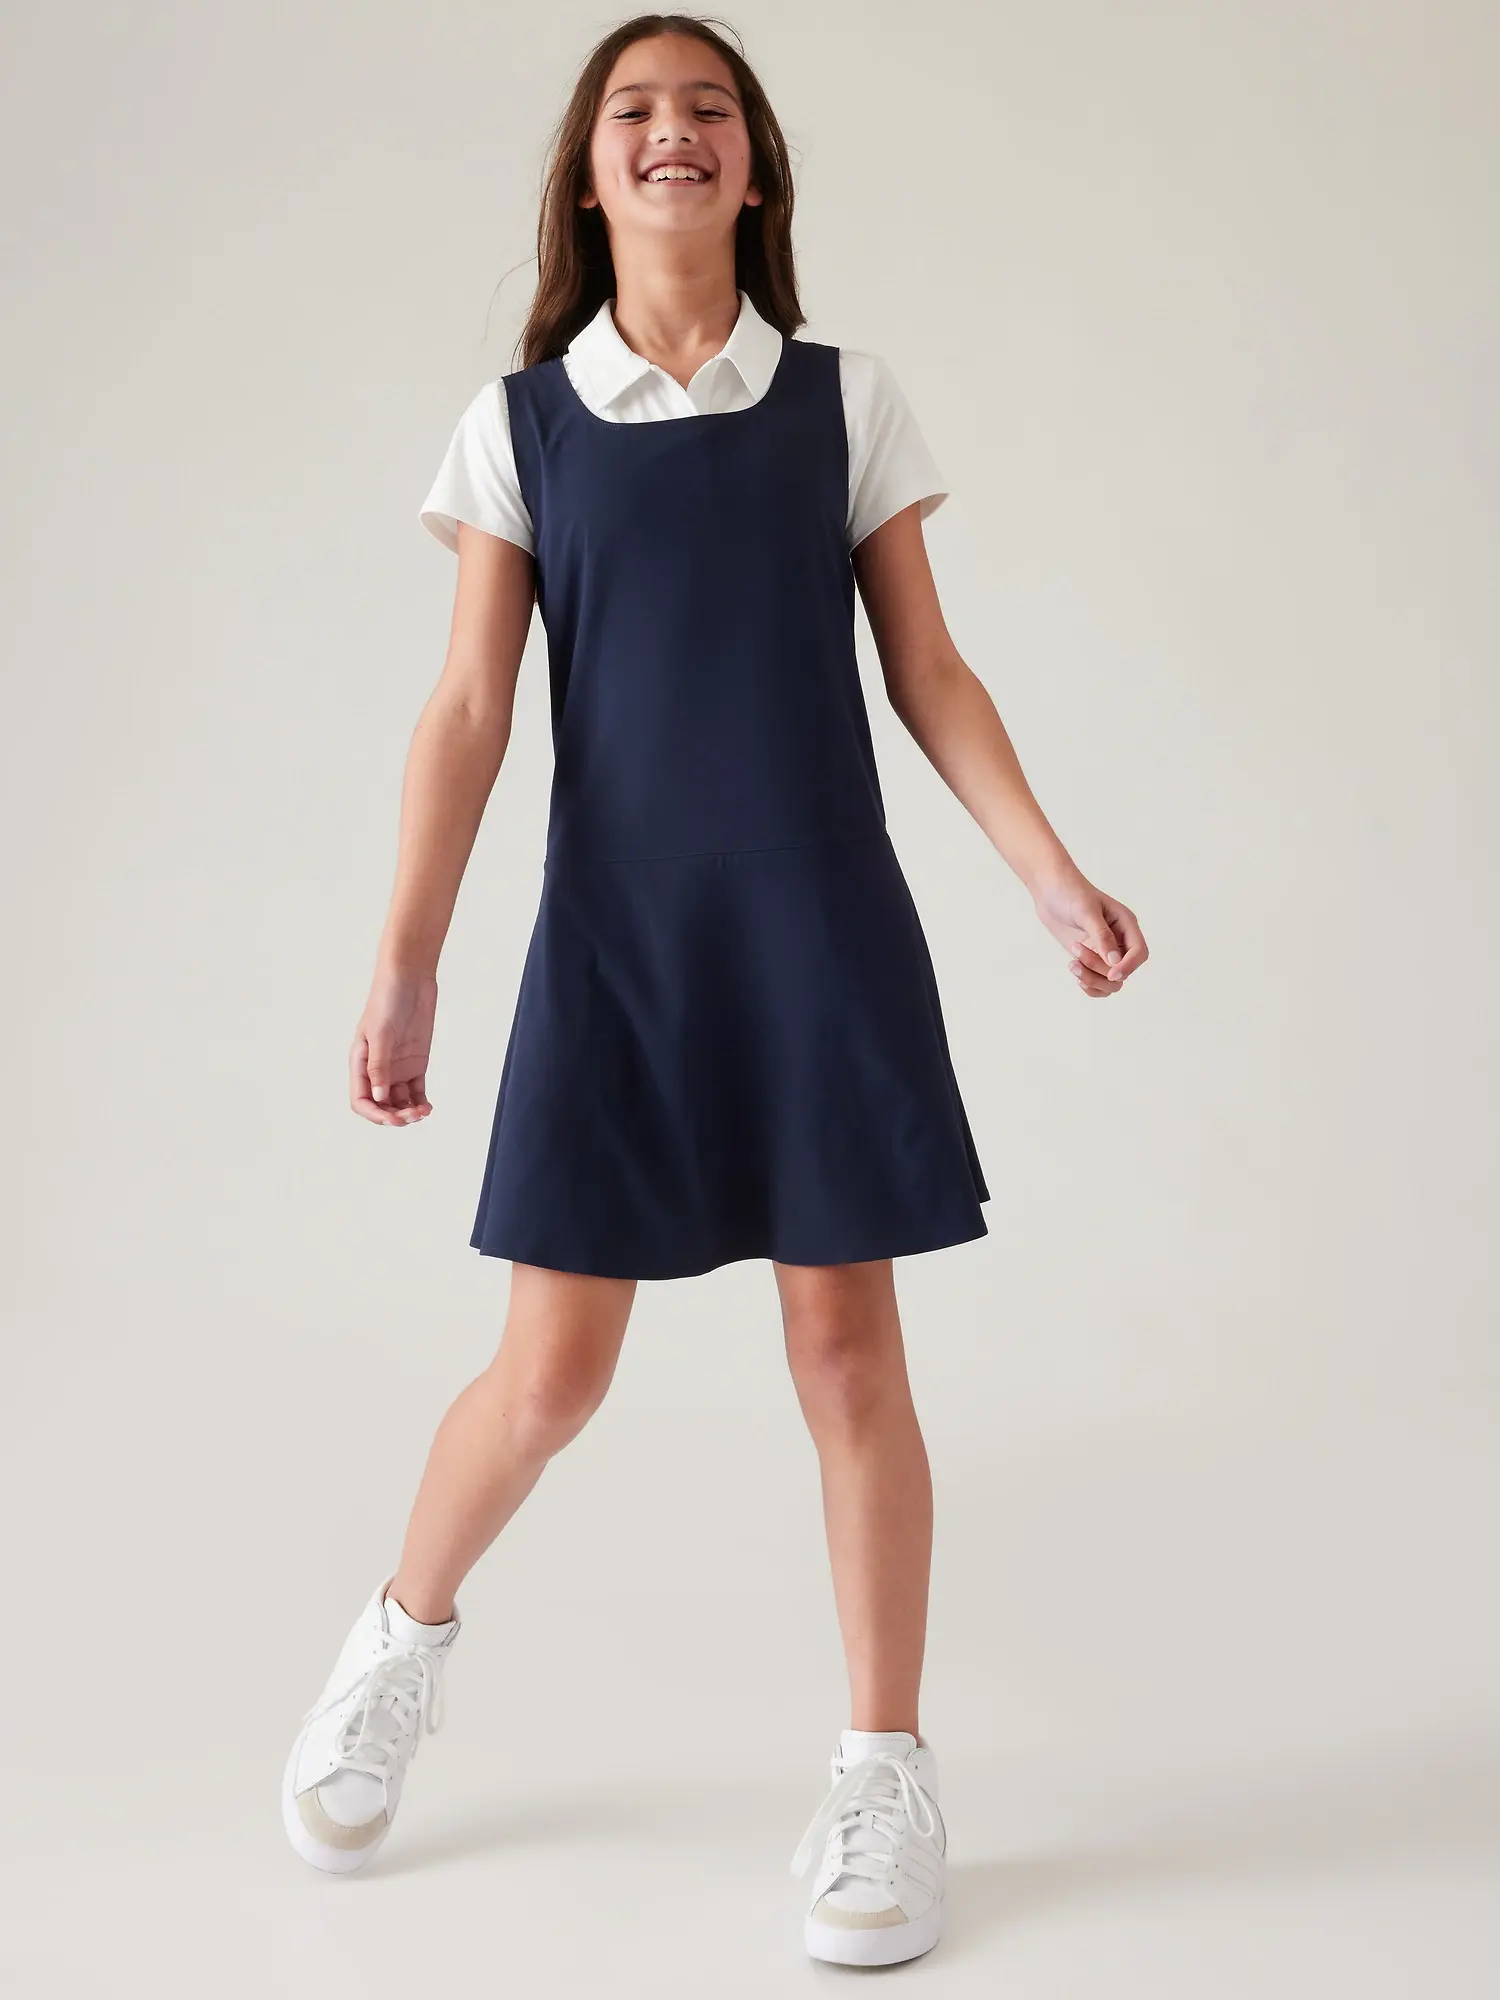 Athleta Girl School Day Dress blue. 1